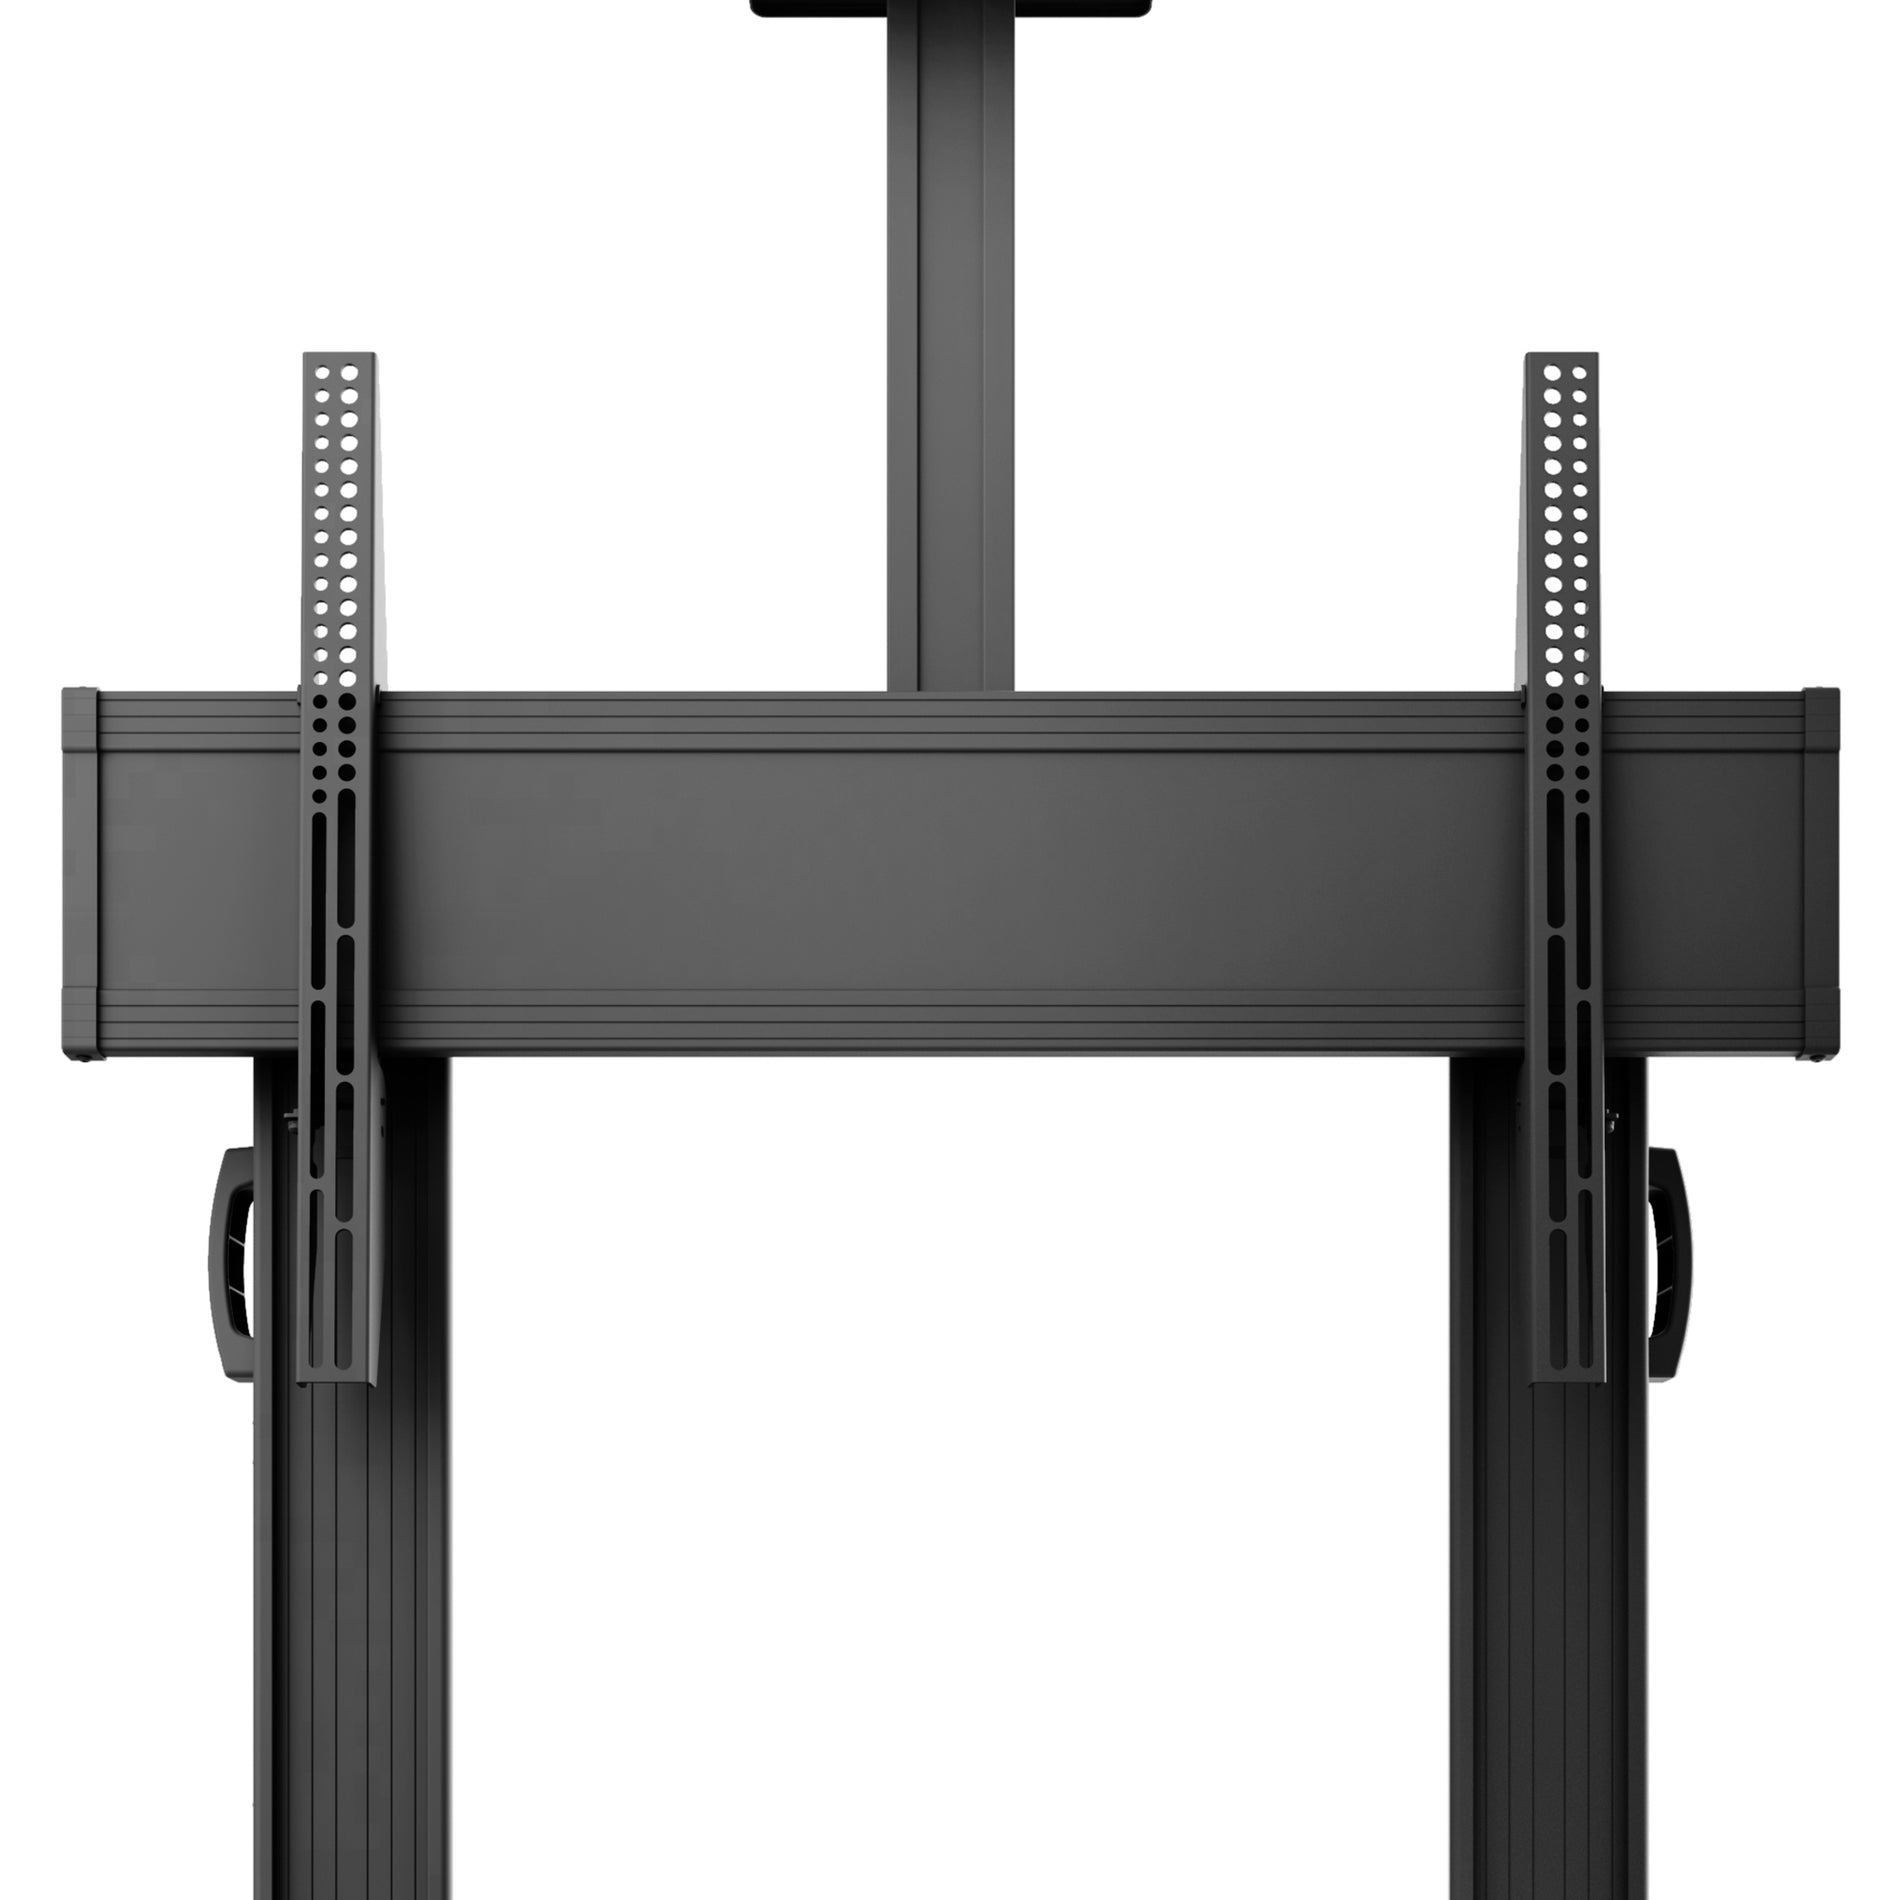 Kanto MTMA100PL Display Stand, L-shaped, 200 lb Load Capacity, Adjustable Shelves, Portable